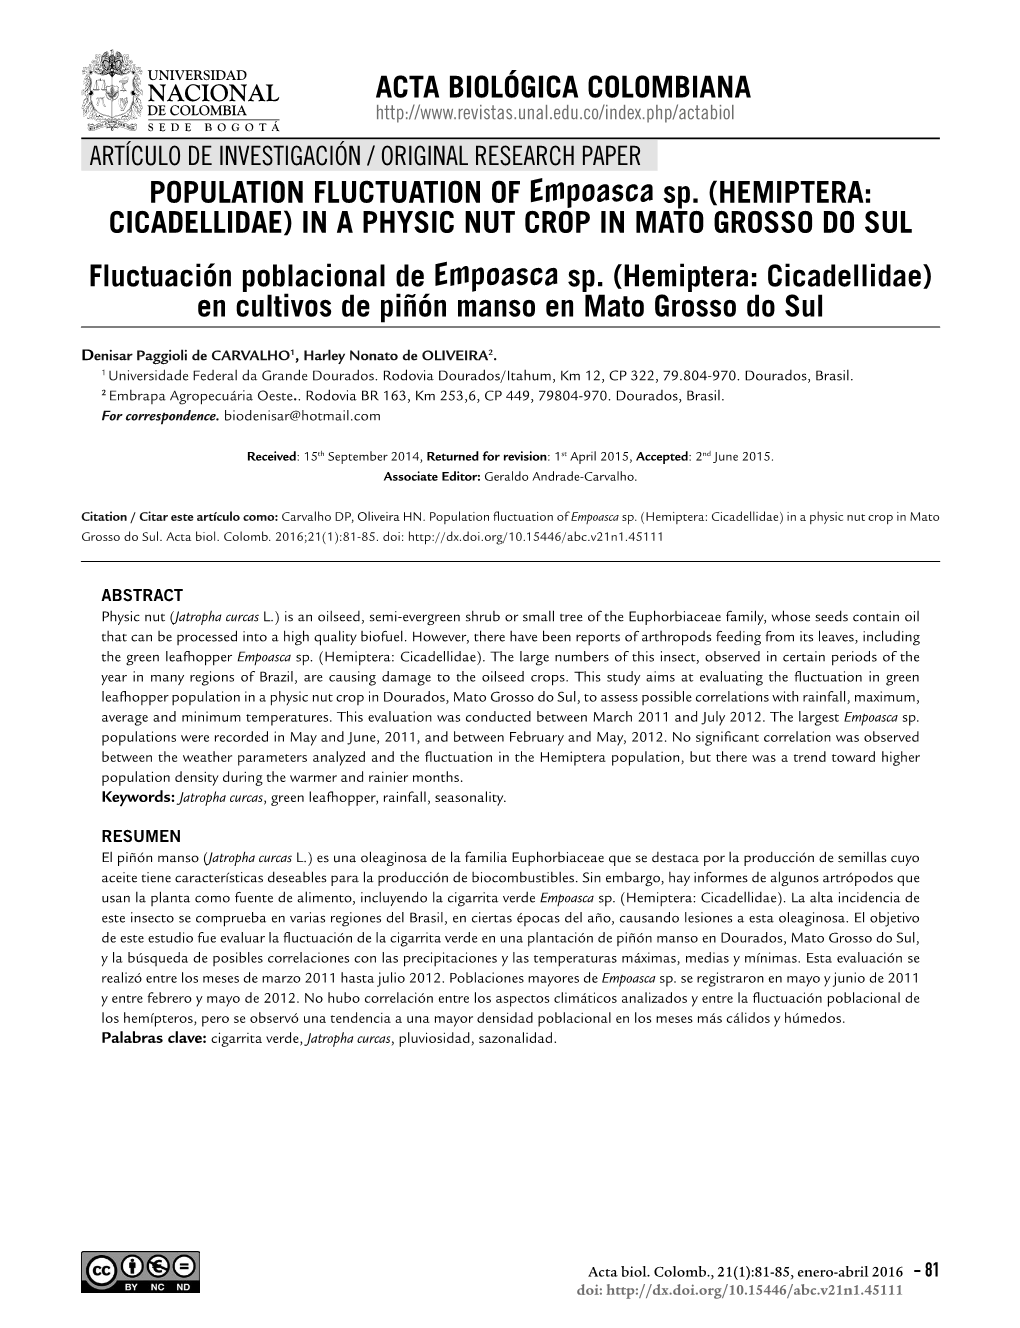 POPULATION FLUCTUATION of Empoasca Sp. (HEMIPTERA: CICADELLIDAE) in a PHYSIC NUT CROP in MATO GROSSO DO SUL Fluctuación Poblacional De Empoasca Sp